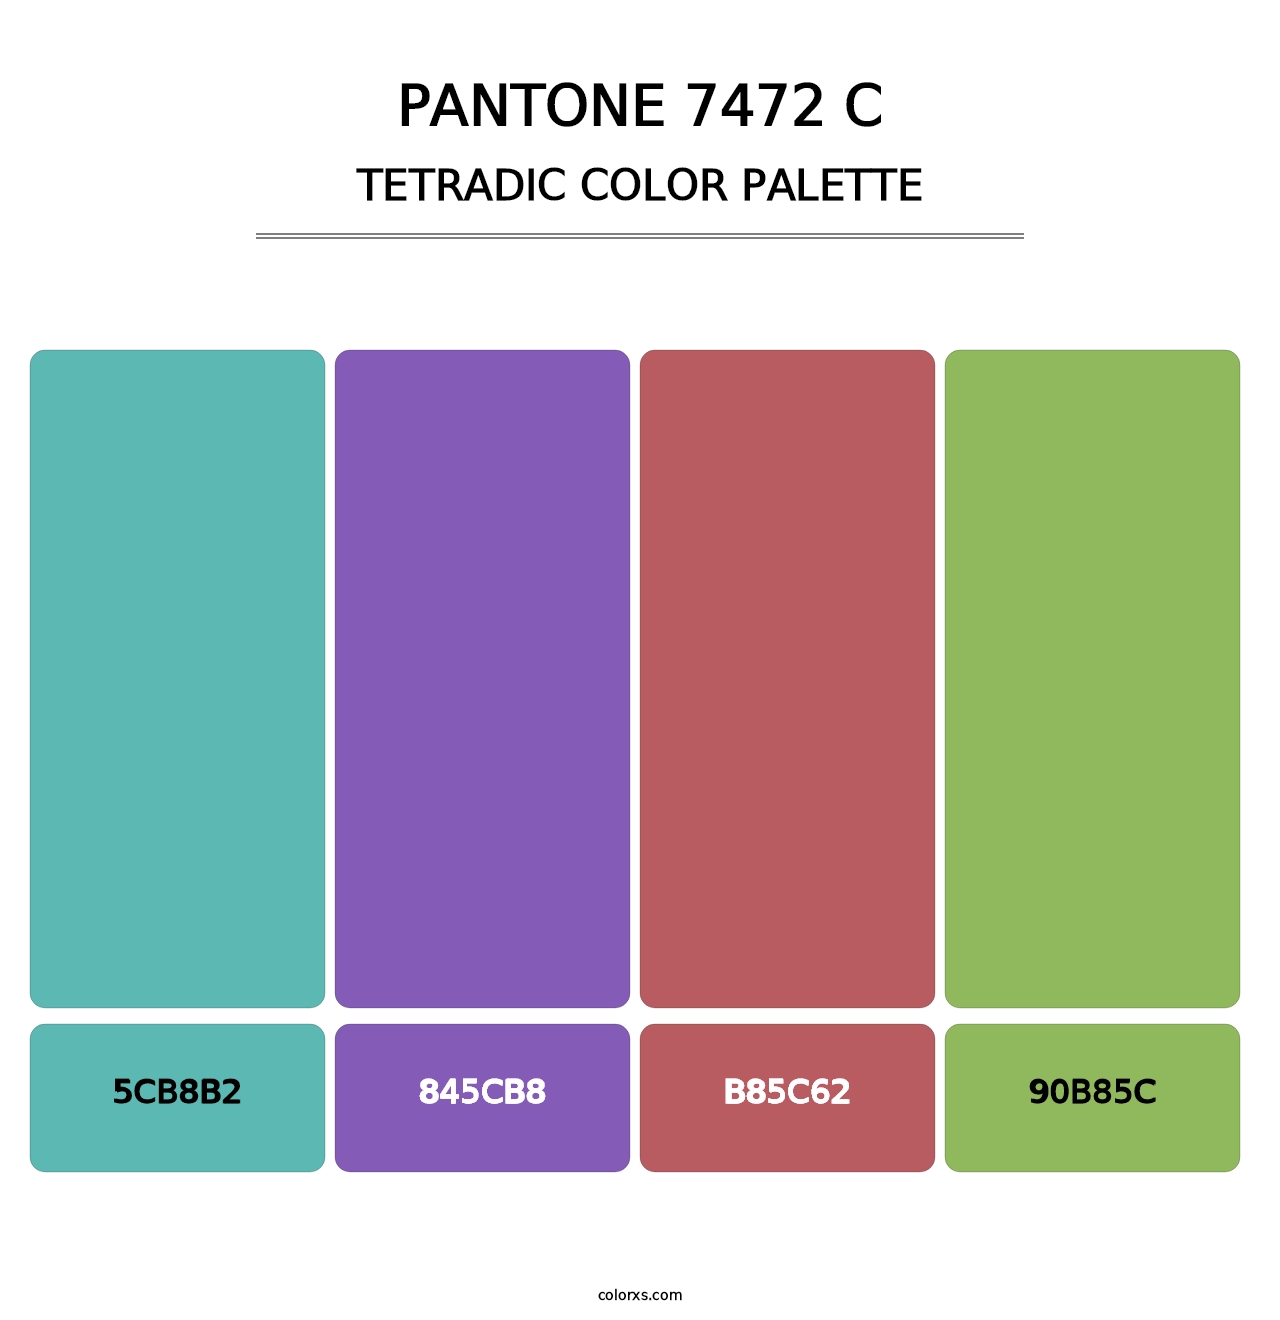 PANTONE 7472 C - Tetradic Color Palette